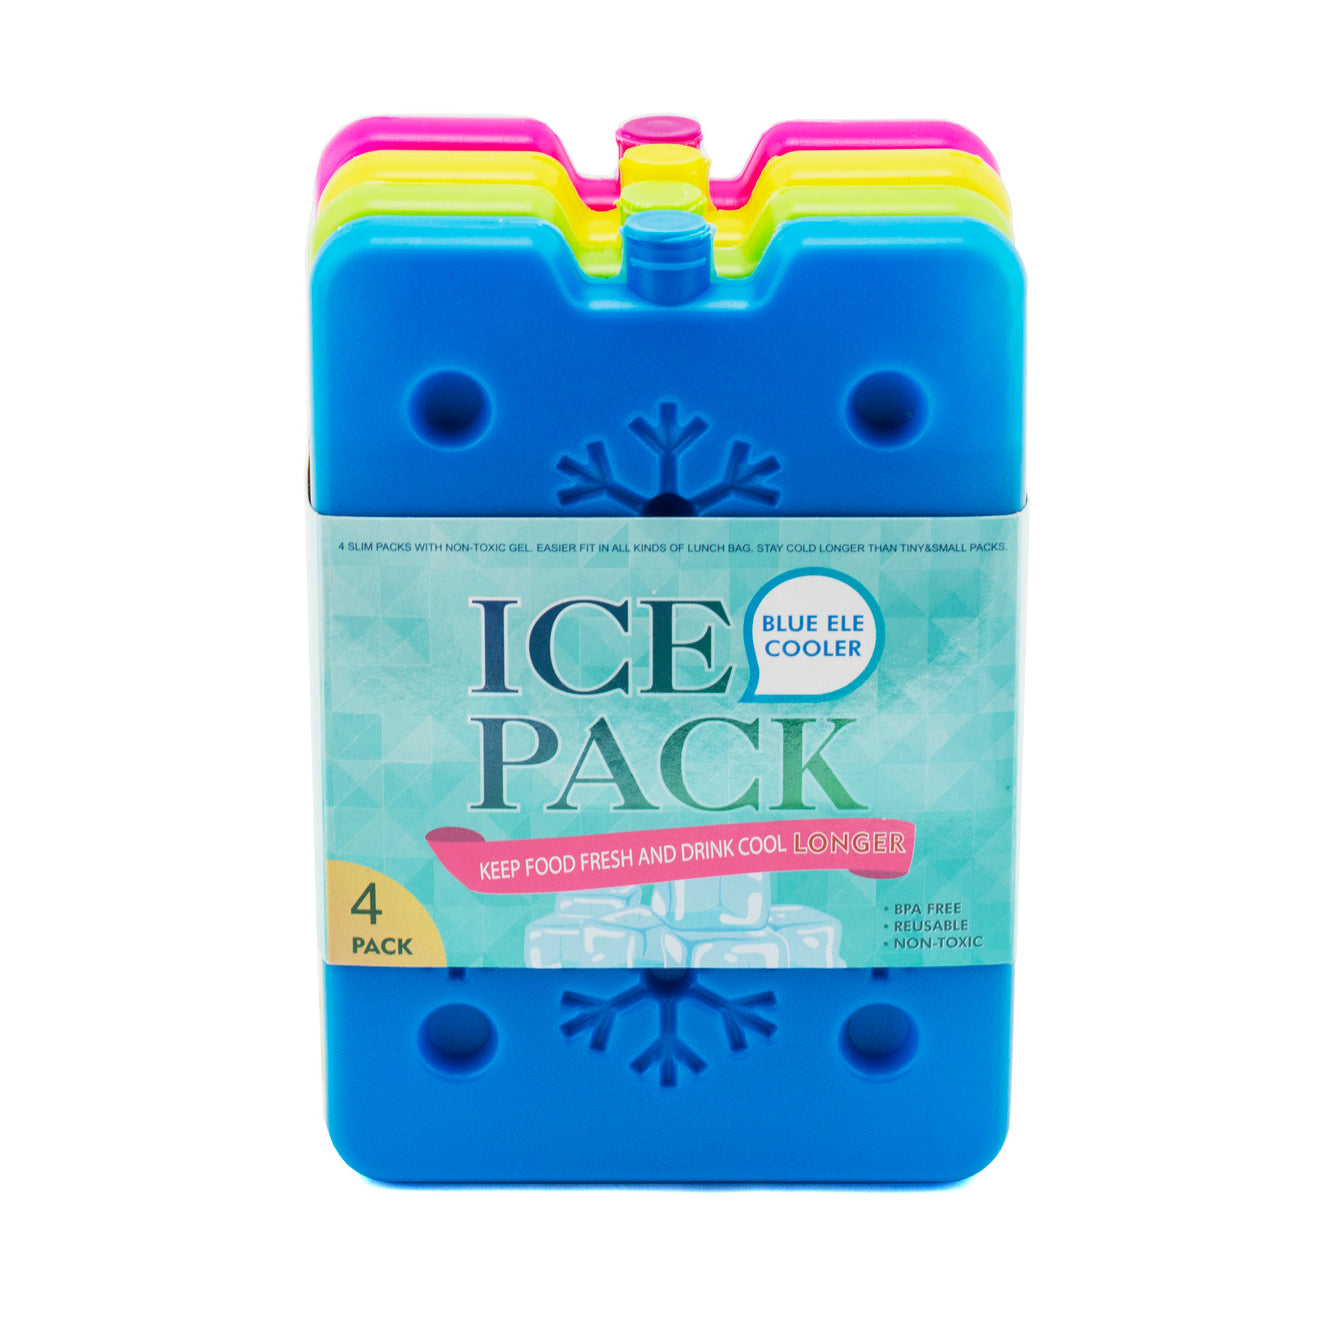 https://www.momjunction.com/wp-content/uploads/product-images/blue-ele-compact-ice-packs_afl218.jpg